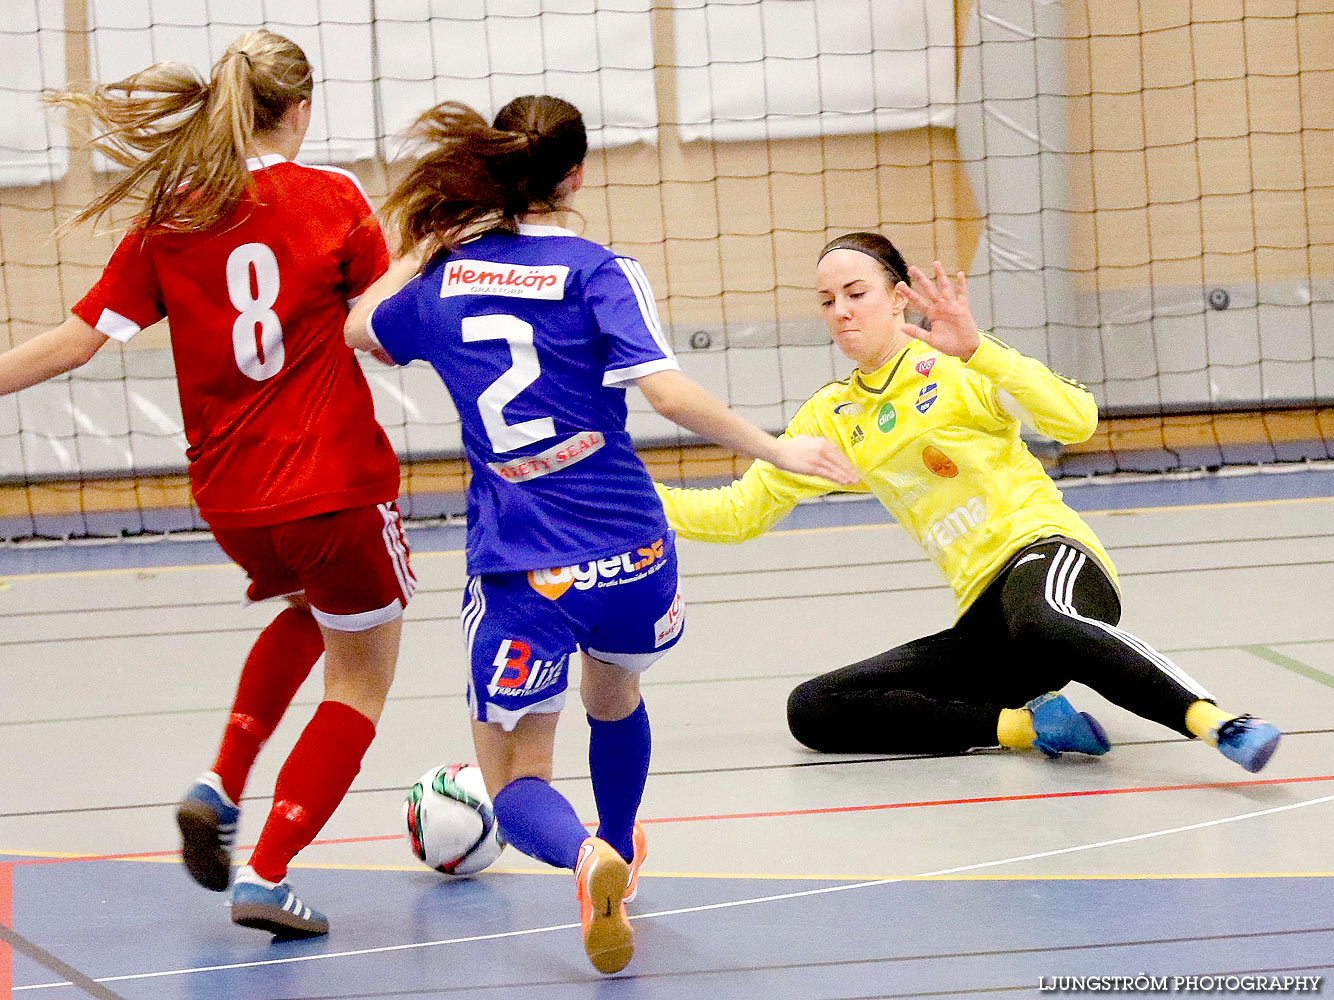 Futsal-DM IK Gauthiod-Bergdalens IK 4-0,dam,Åse-Vistehallen,Grästorp,Sverige,Futsal,,2015,127767